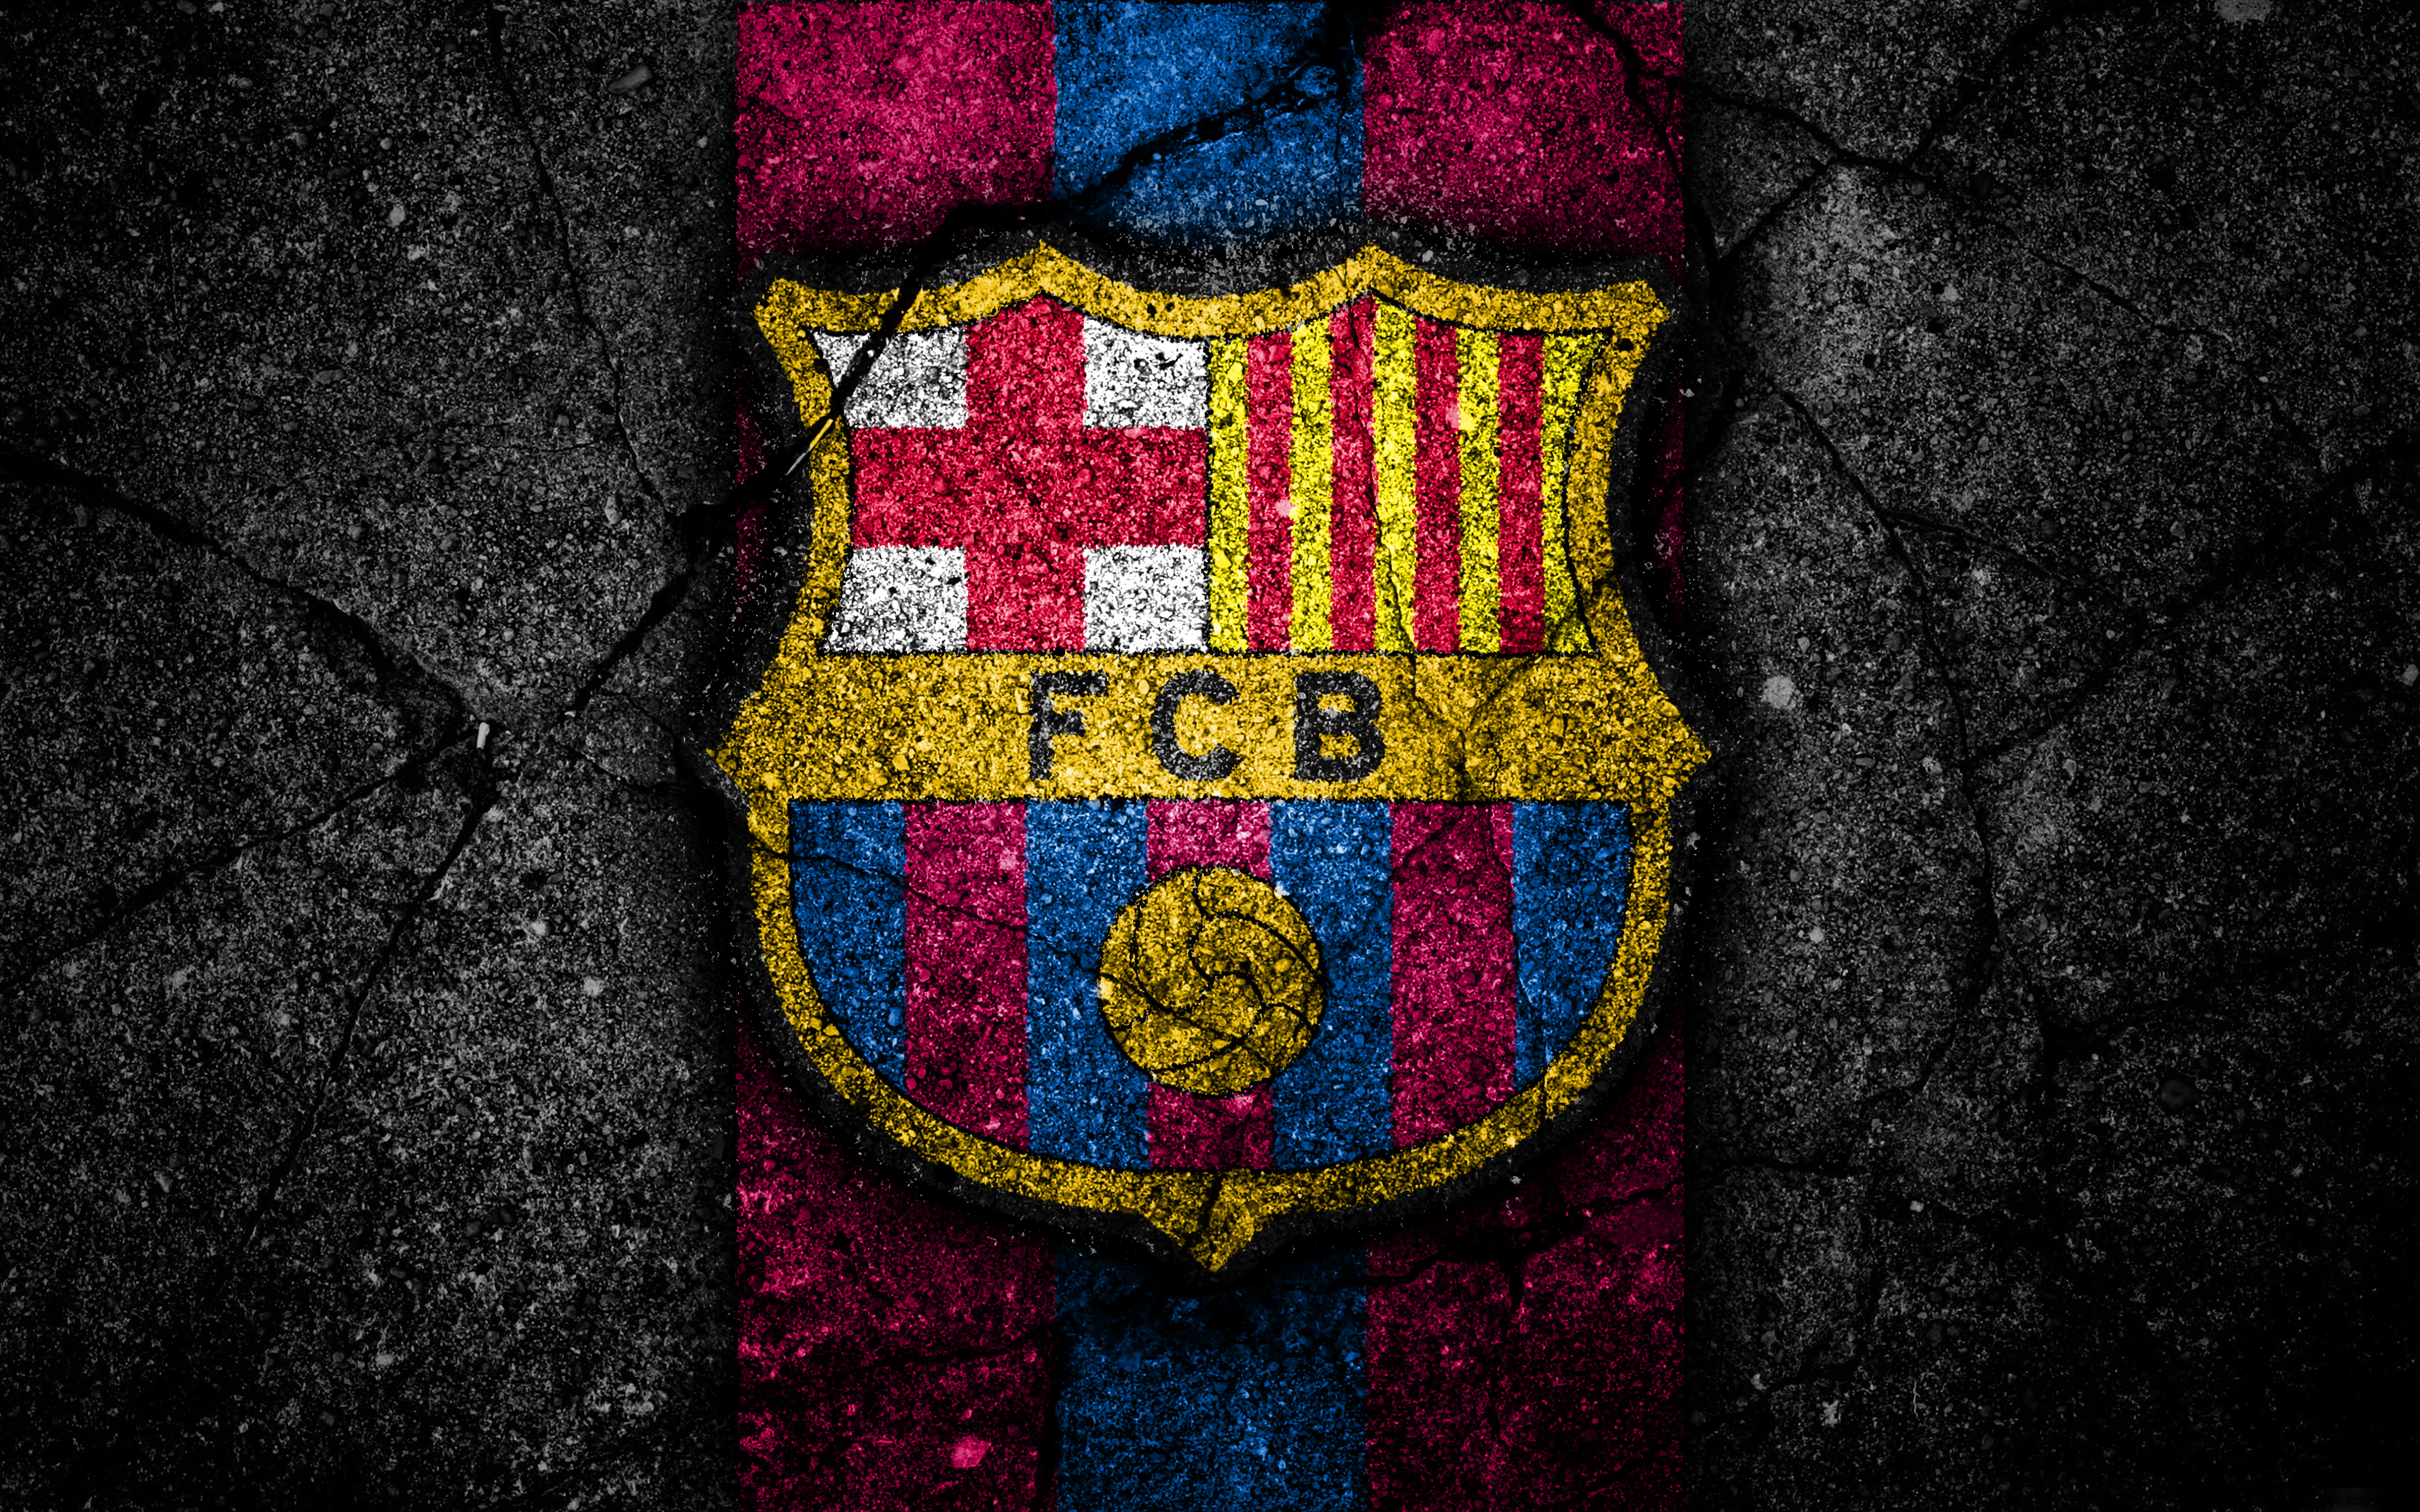 20+ 4K FC Barcelona Fondos de pantalla | Fondos de Escritorio